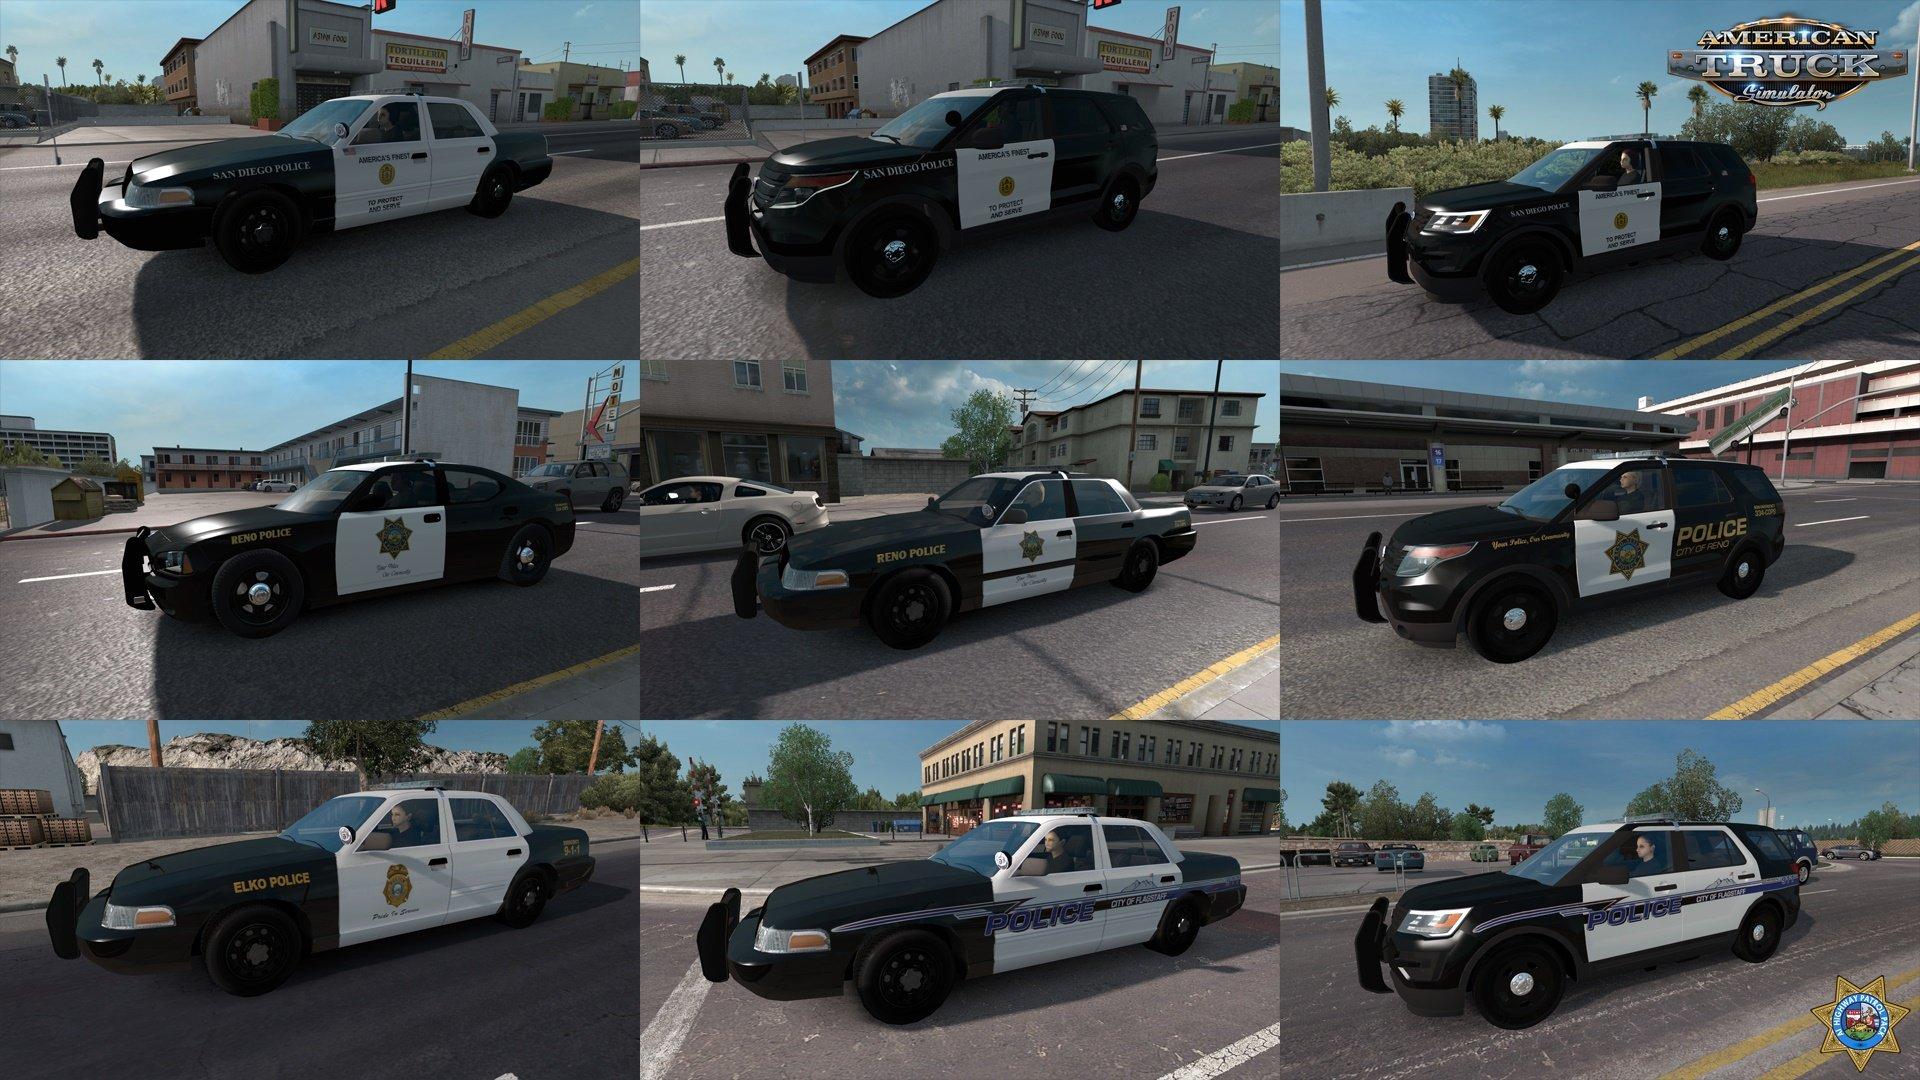 State Highway Patrol v1.42